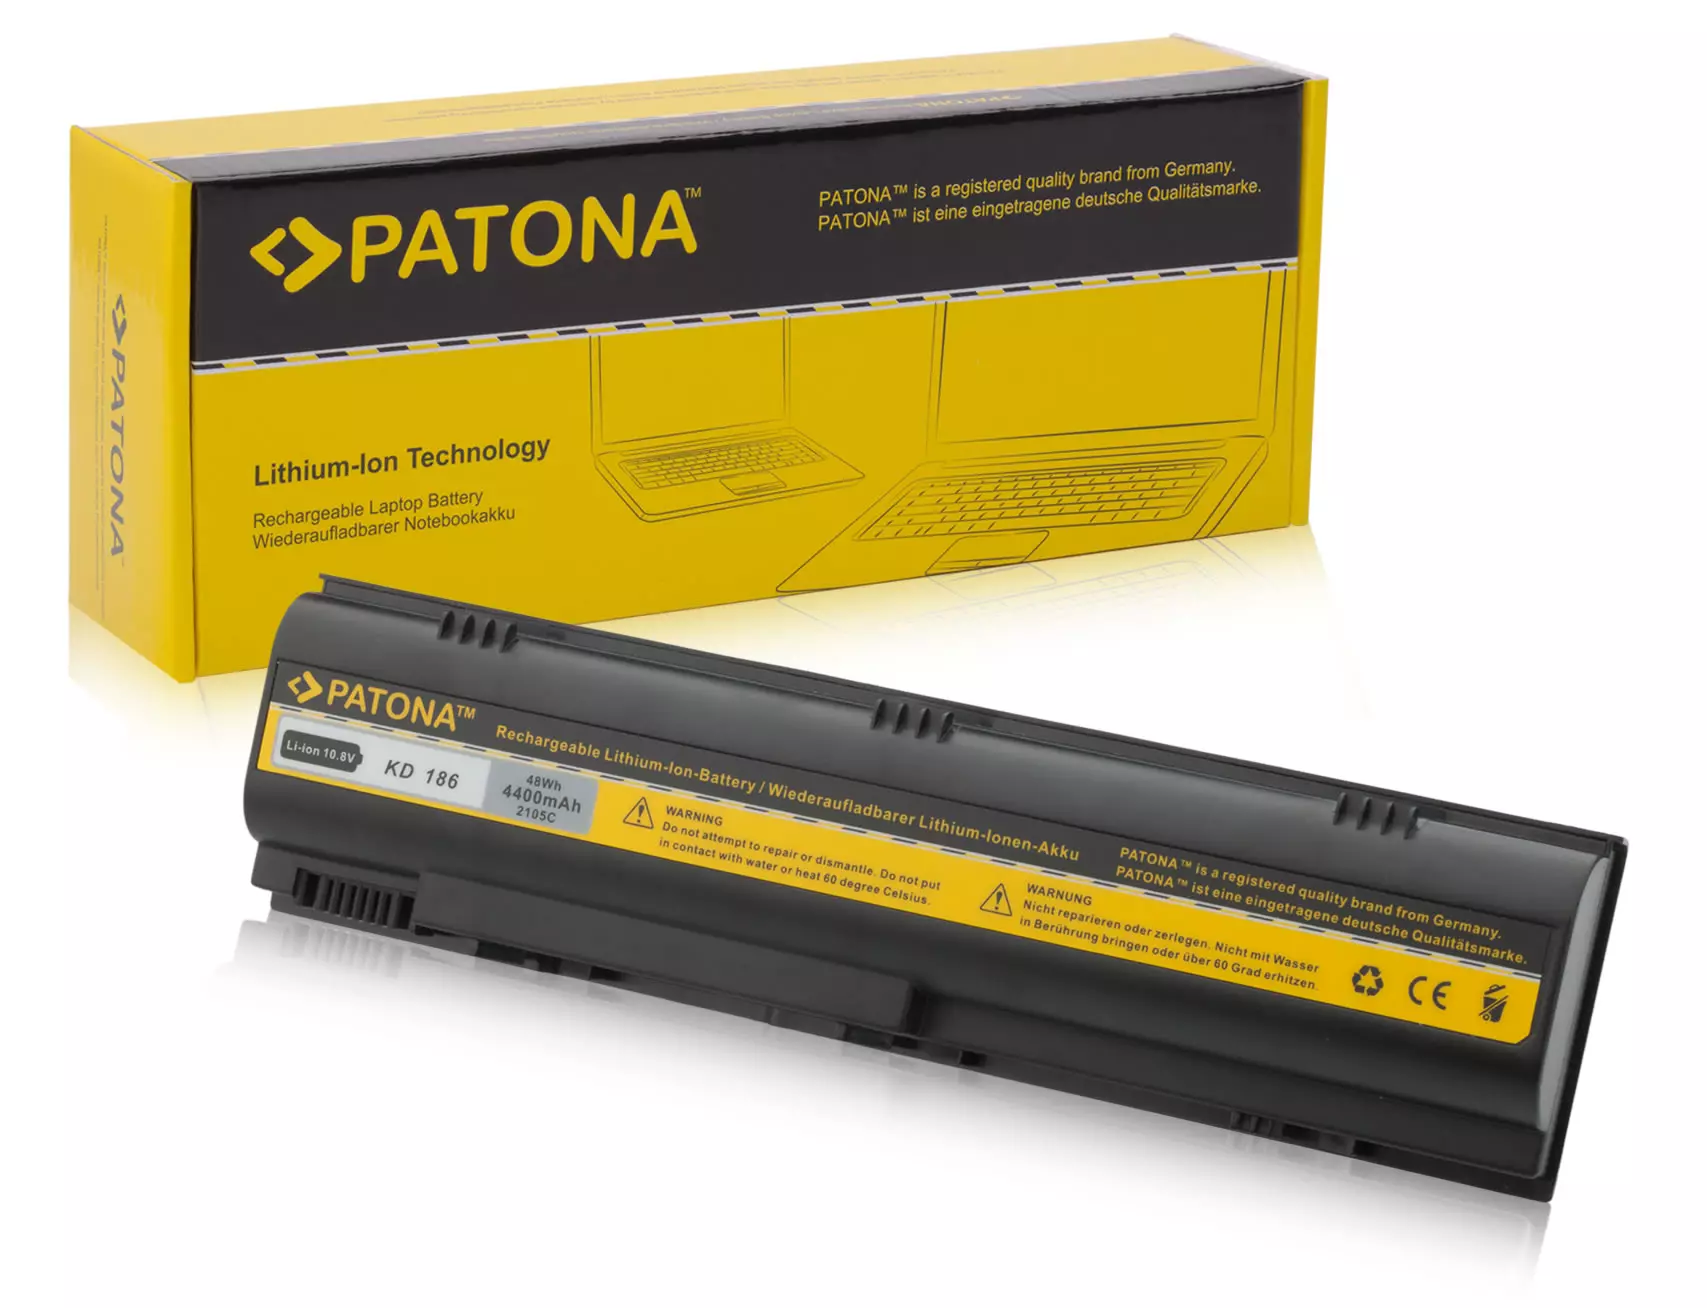 DELL Inspiron 1300, B120, B130, XD187, 120L, 4400 mAh baterie / baterie reîncărcabilă - Patona